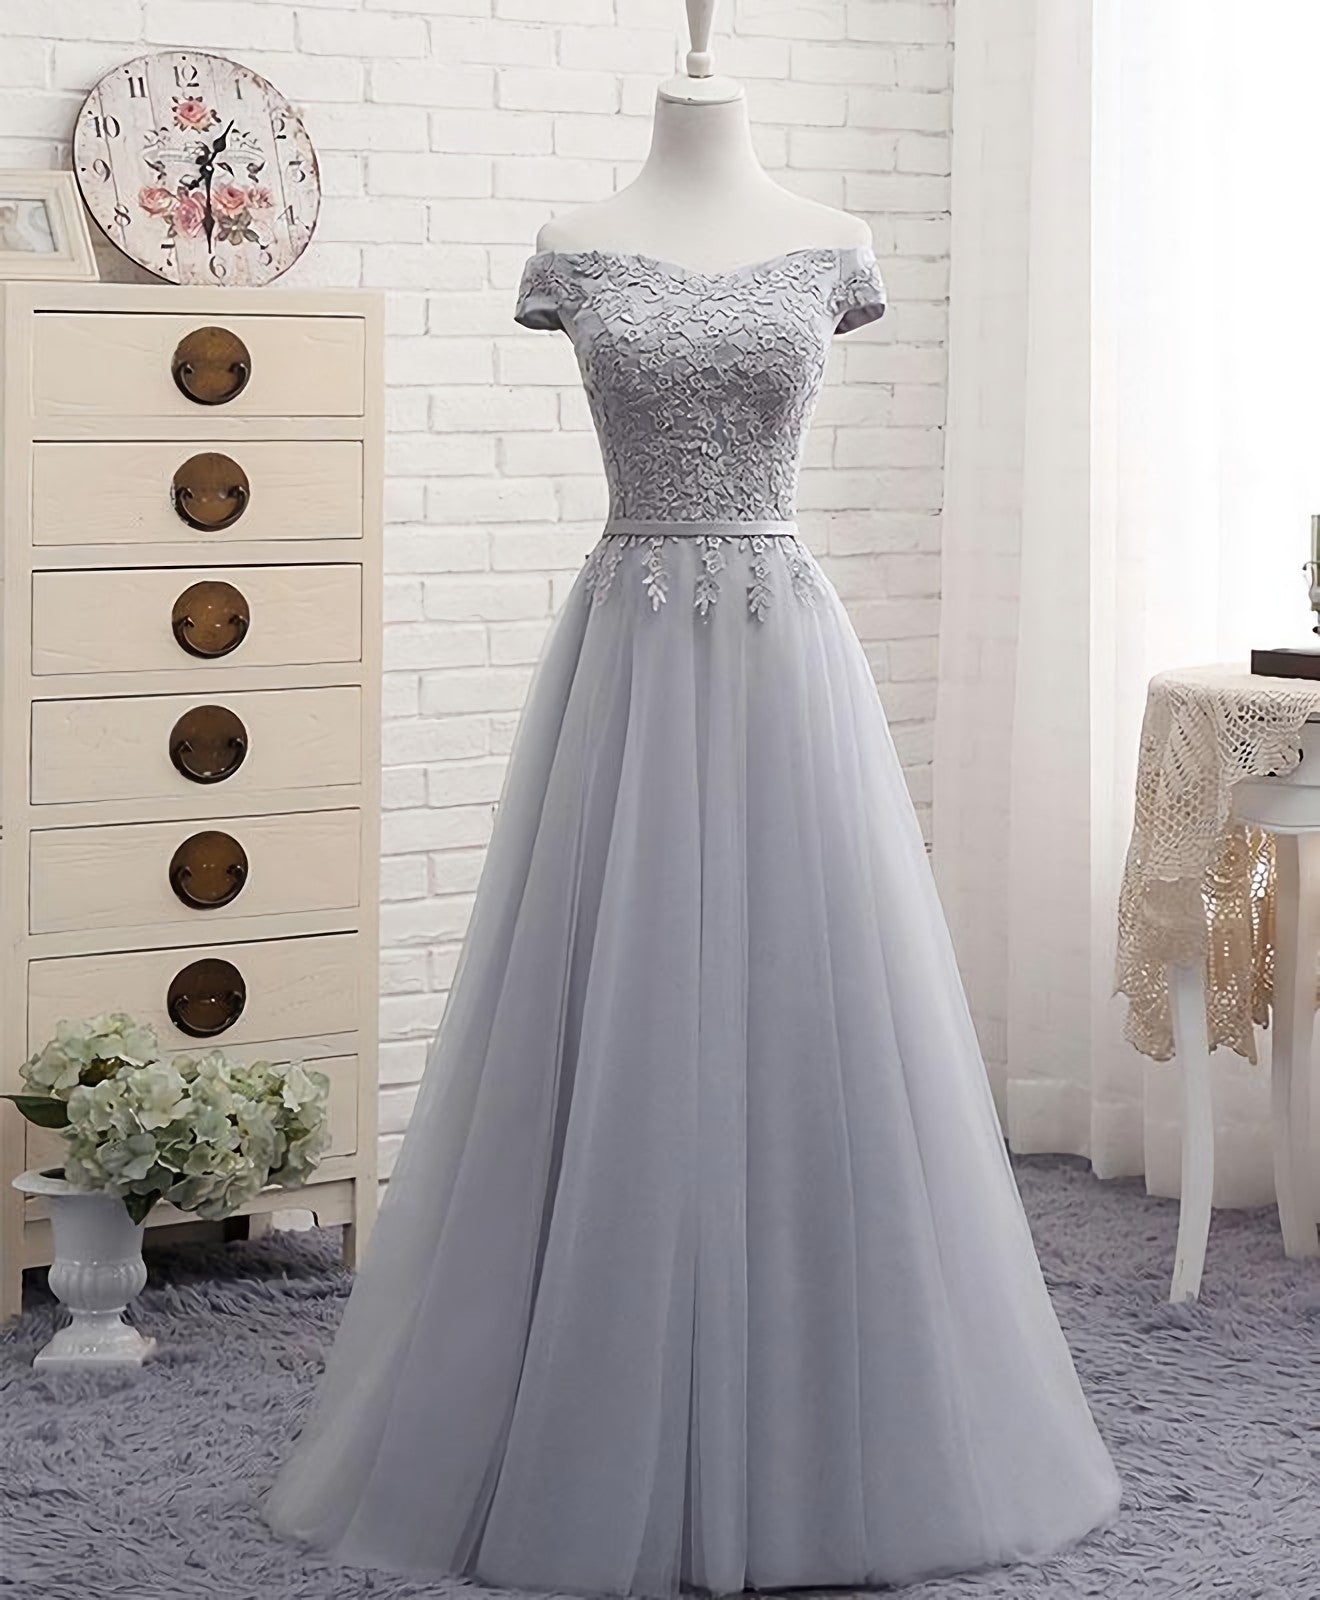 Gray A Line Lace Off Shoulder Corset Prom Dress, Lace Evening Dresses outfit, Evening Dresses Dresses